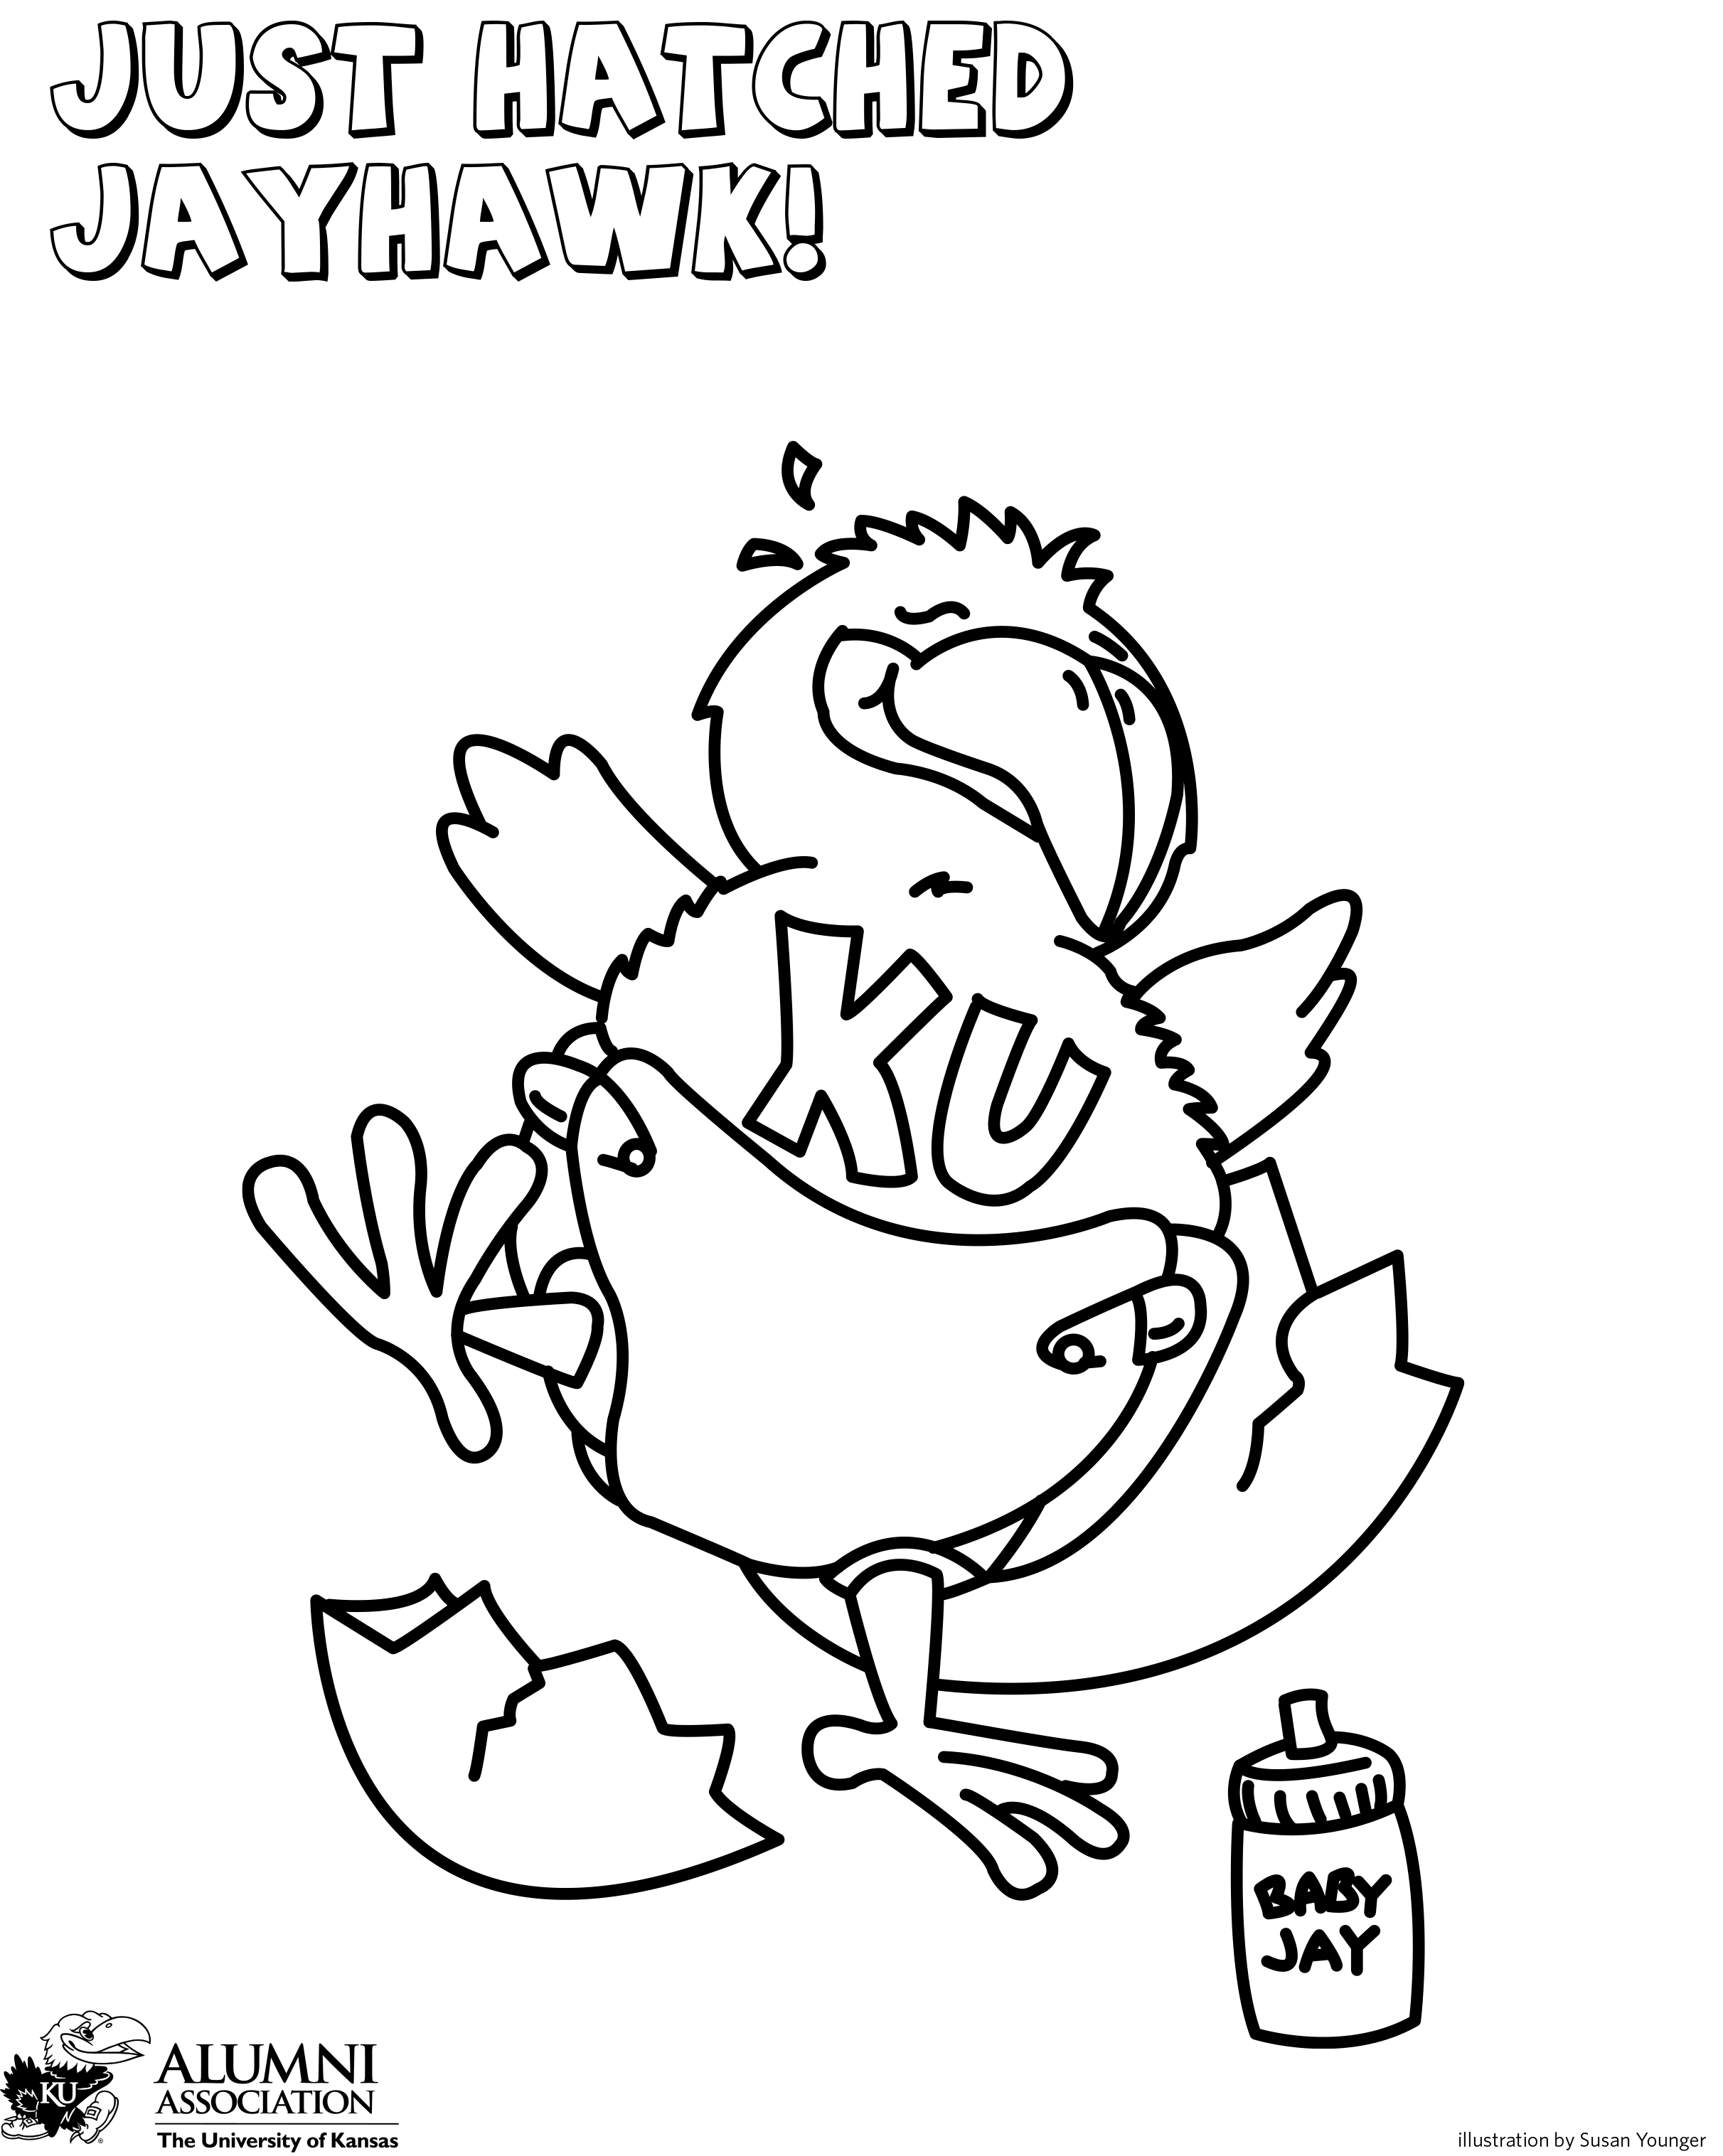 Just Hatched Jayhawk - KU coloring page